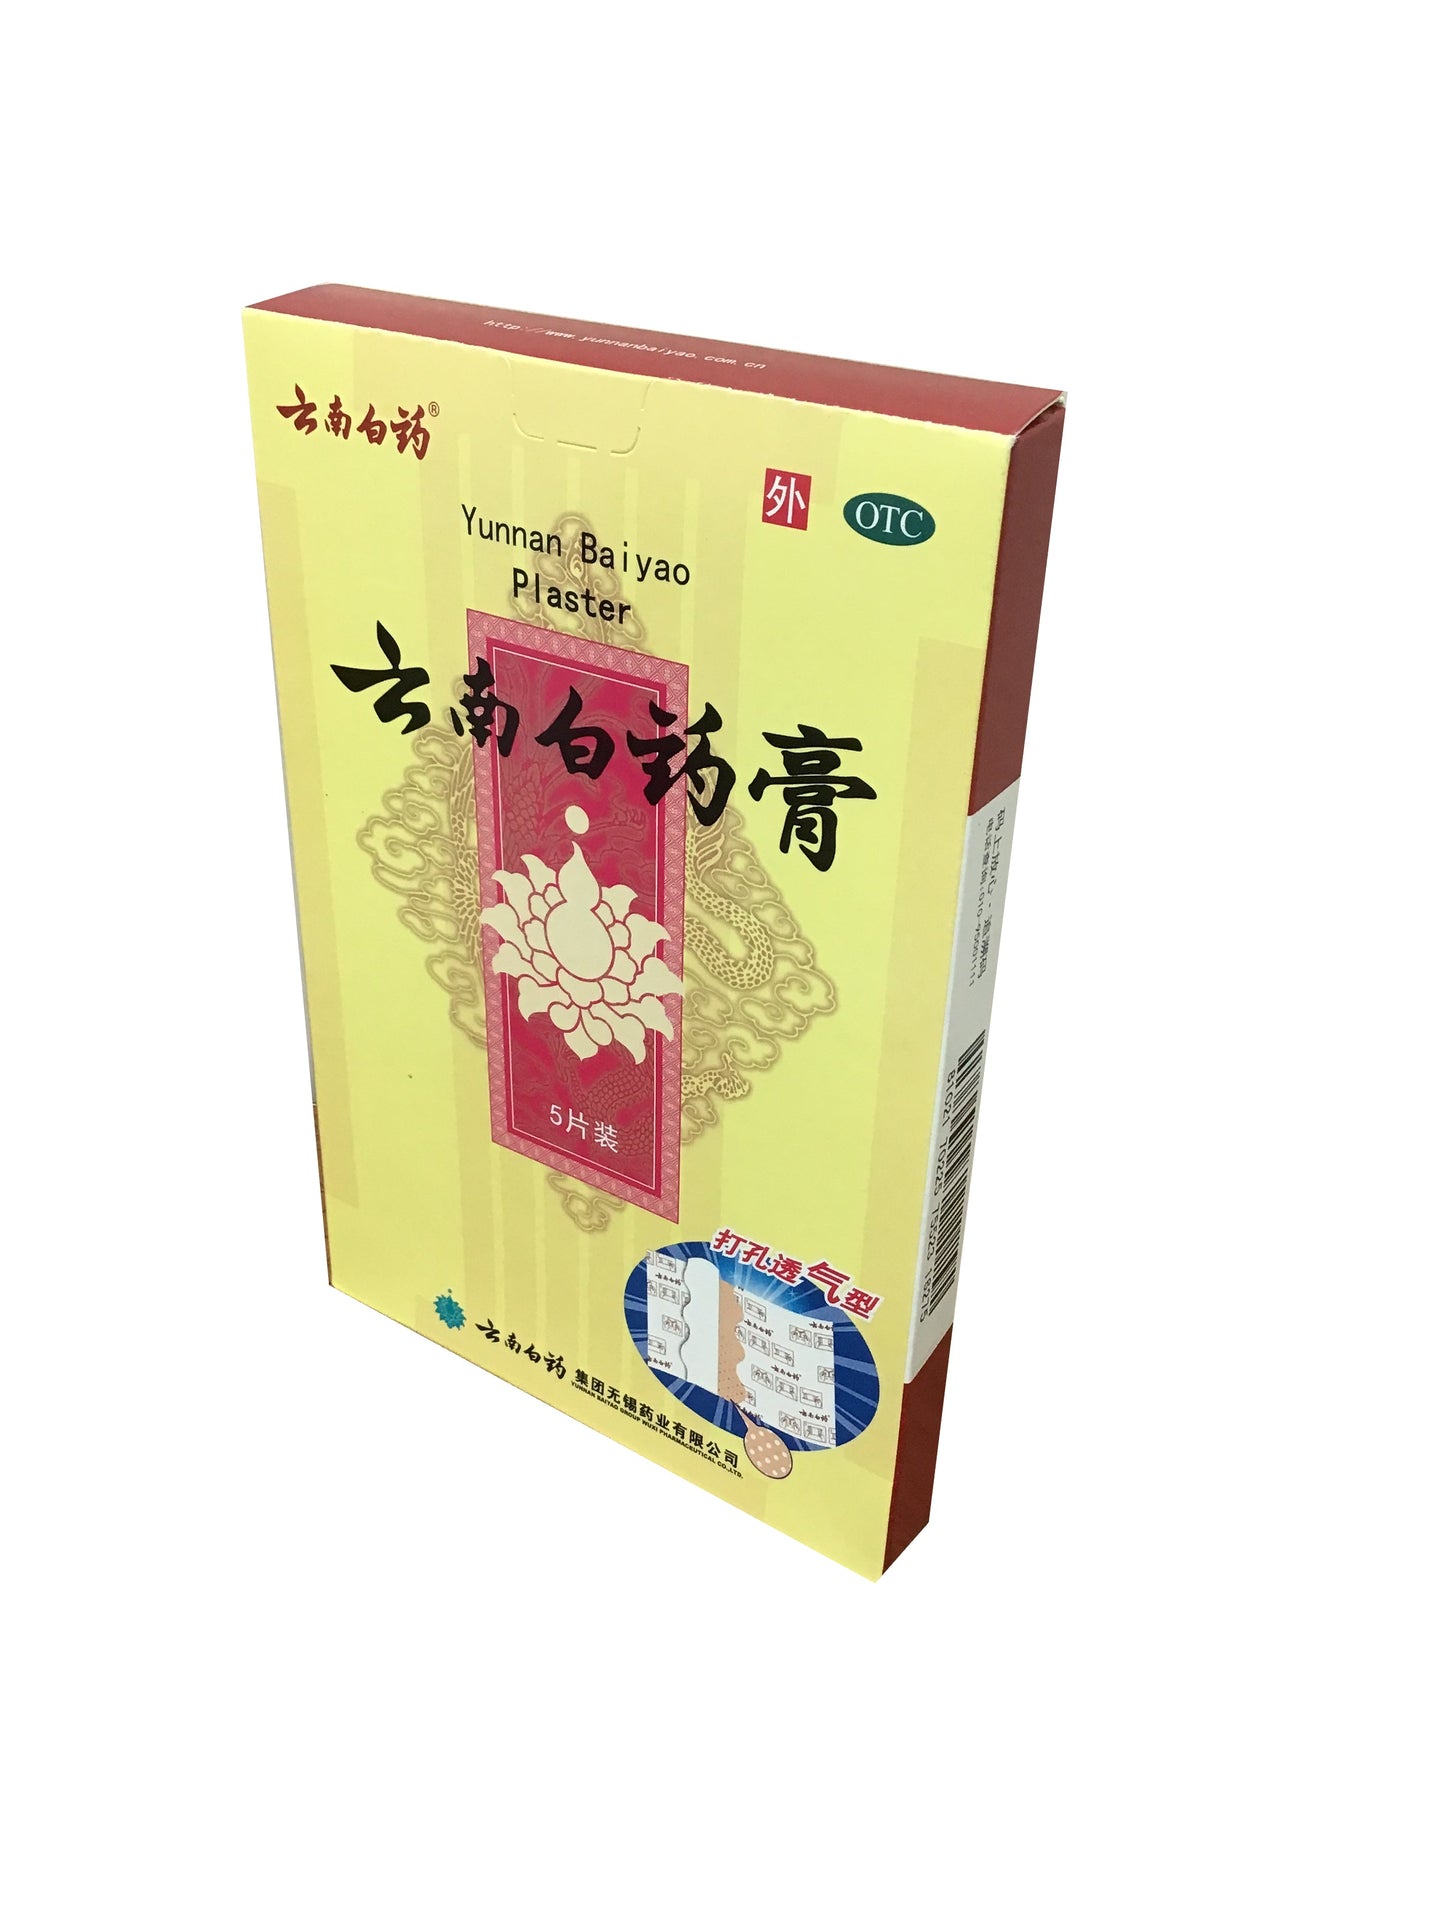 Yunnan Baiyao Plaster (5 Patches) 云南白药膏 (5贴装）